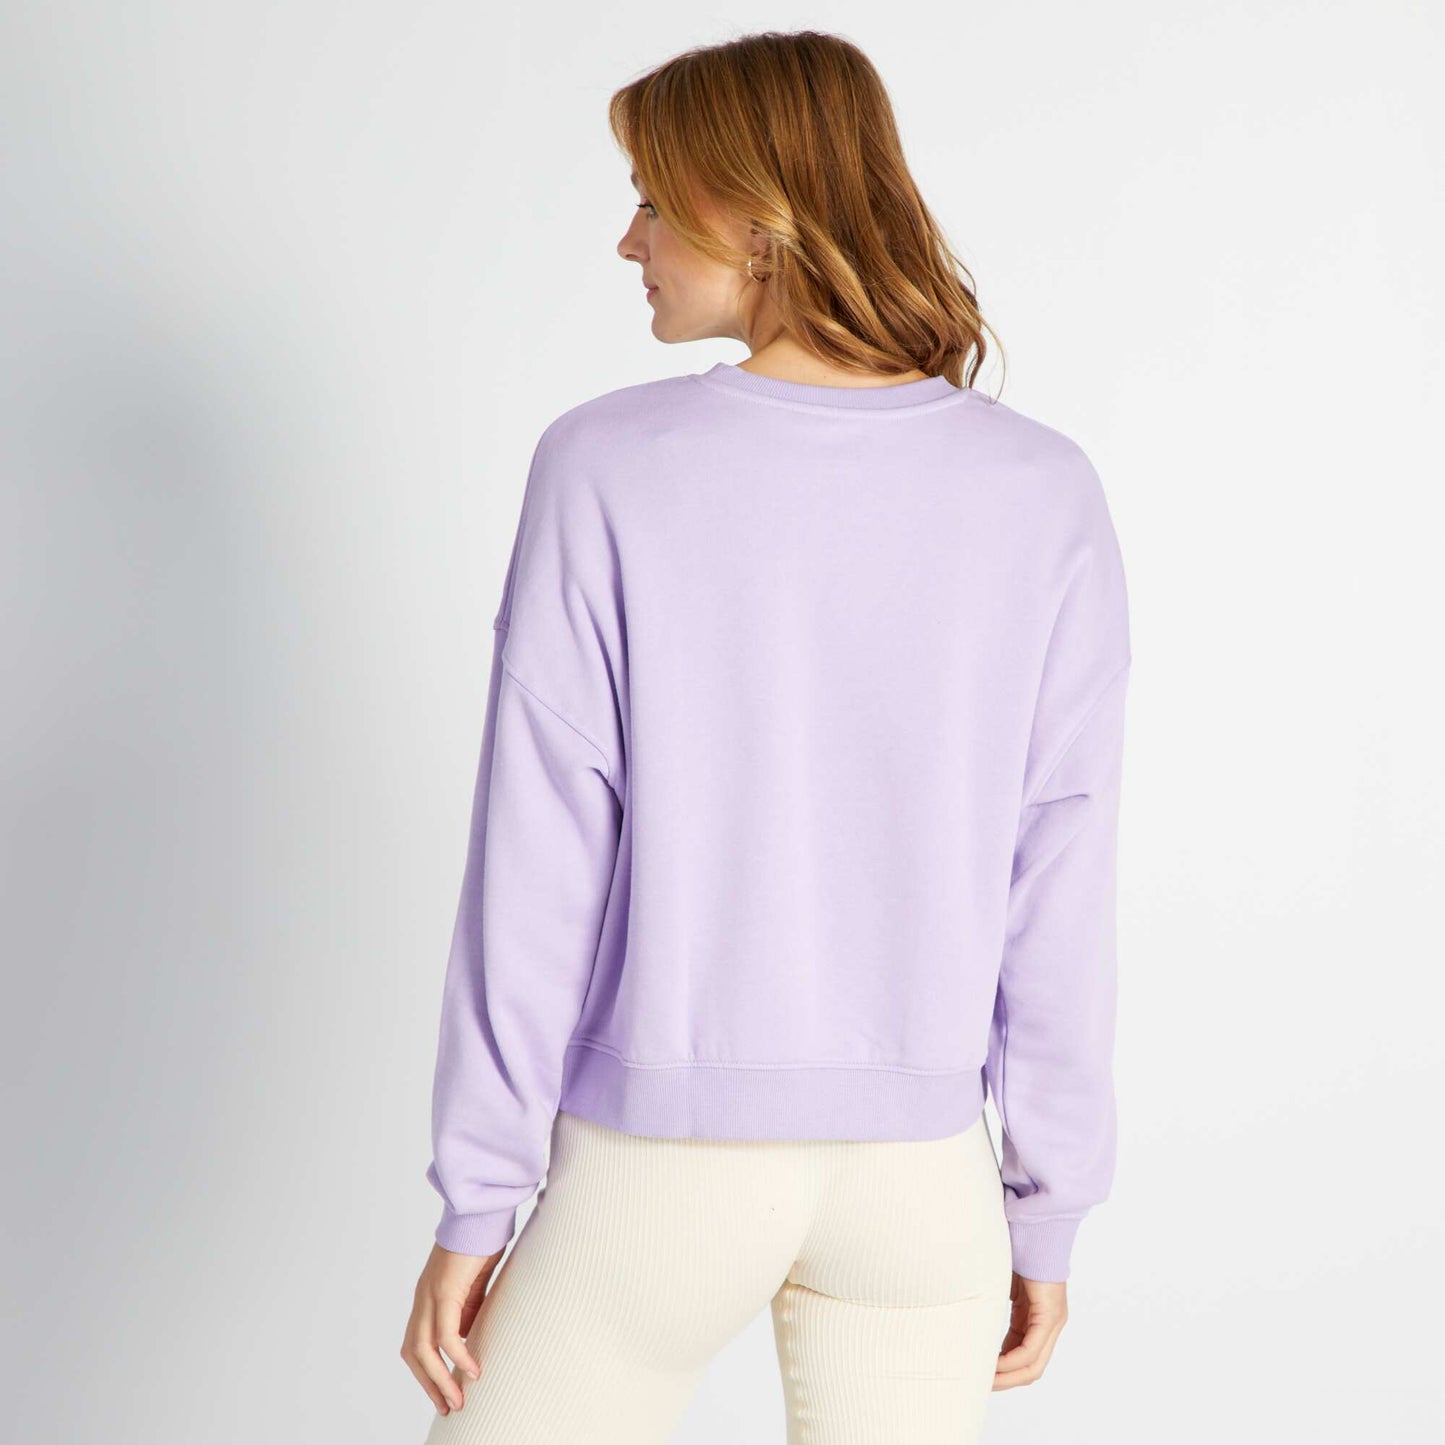 Plain sweatshirt fabric sweater PURPLE_ROS